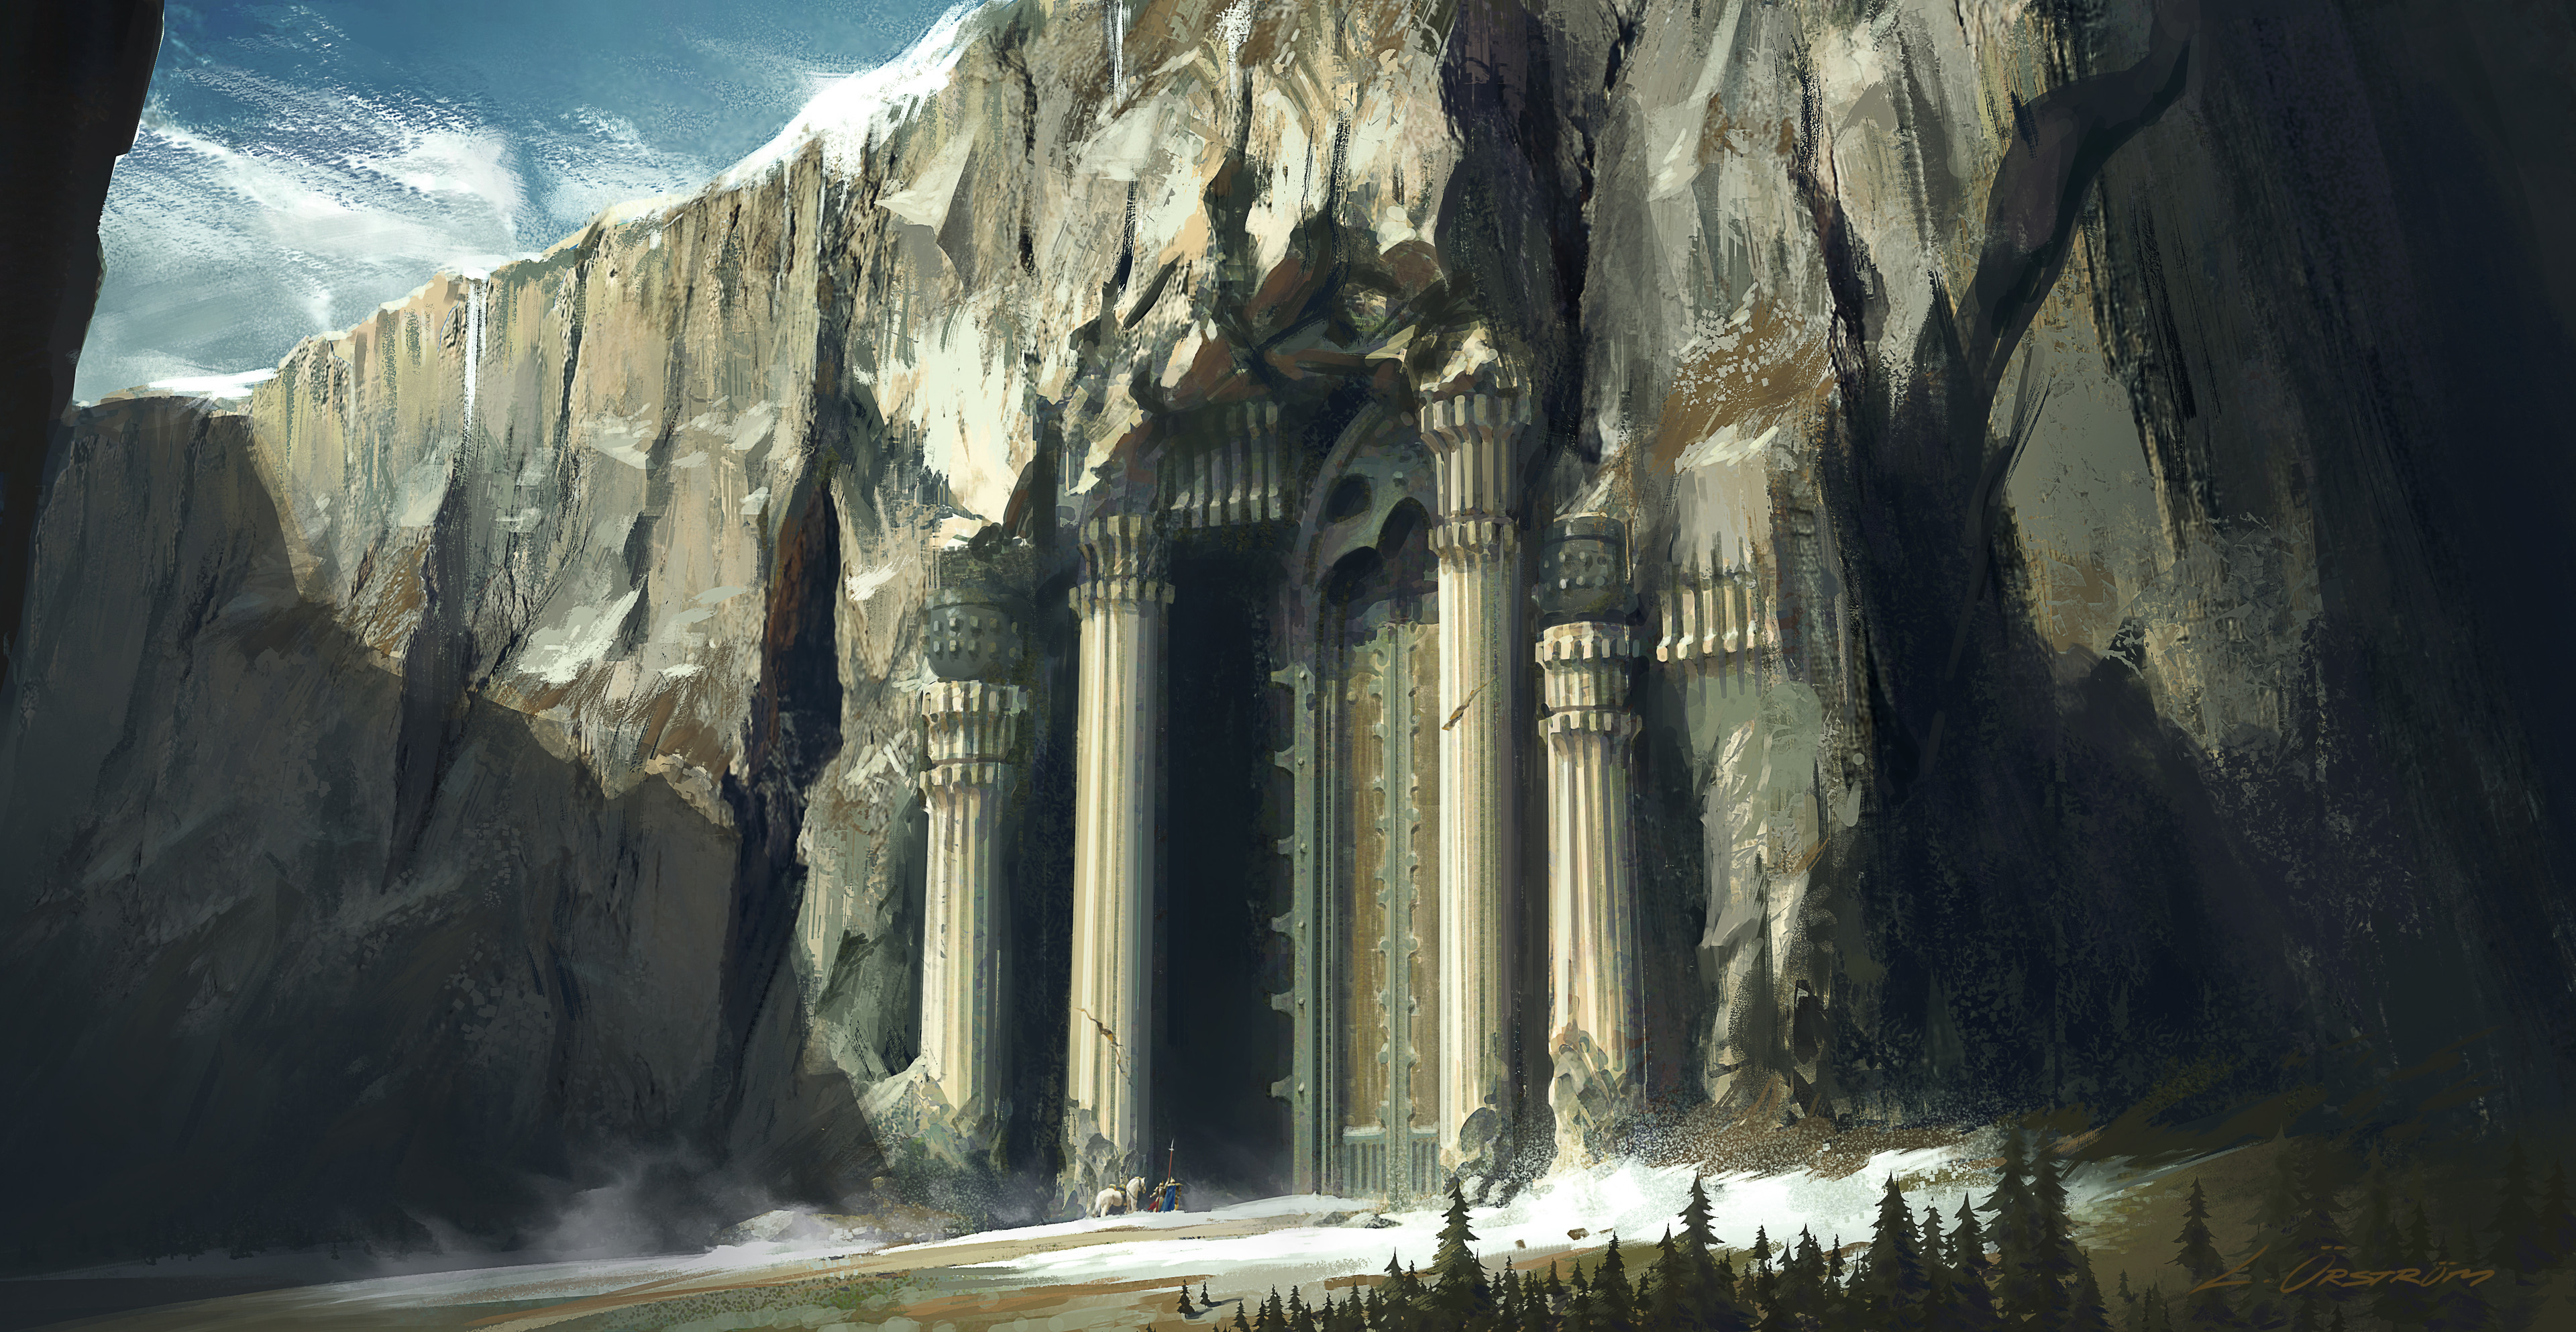 The Gates of Anathoth